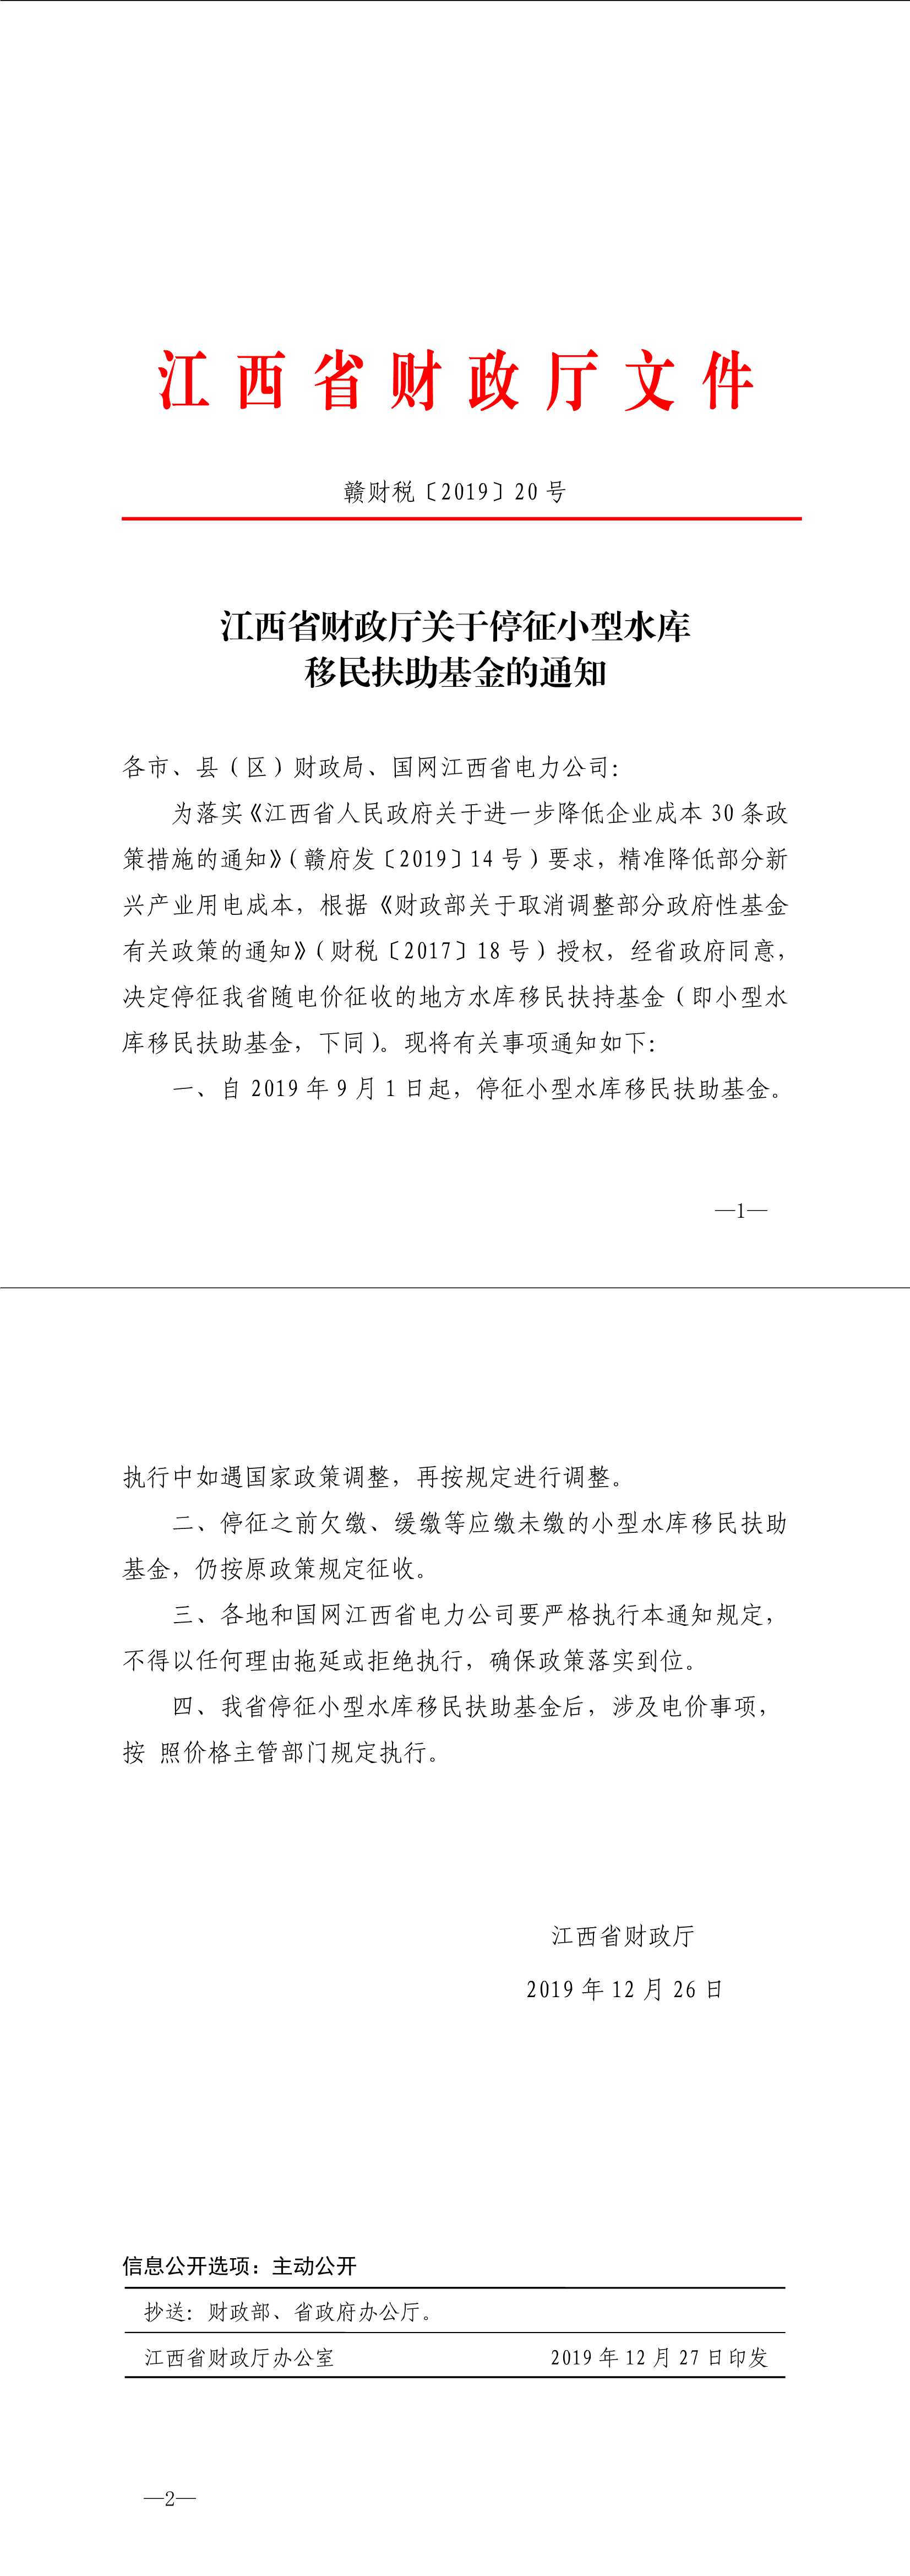 Do_江西省财政厅关于停征小型水库移民扶助基金的通知_1.Jpeg